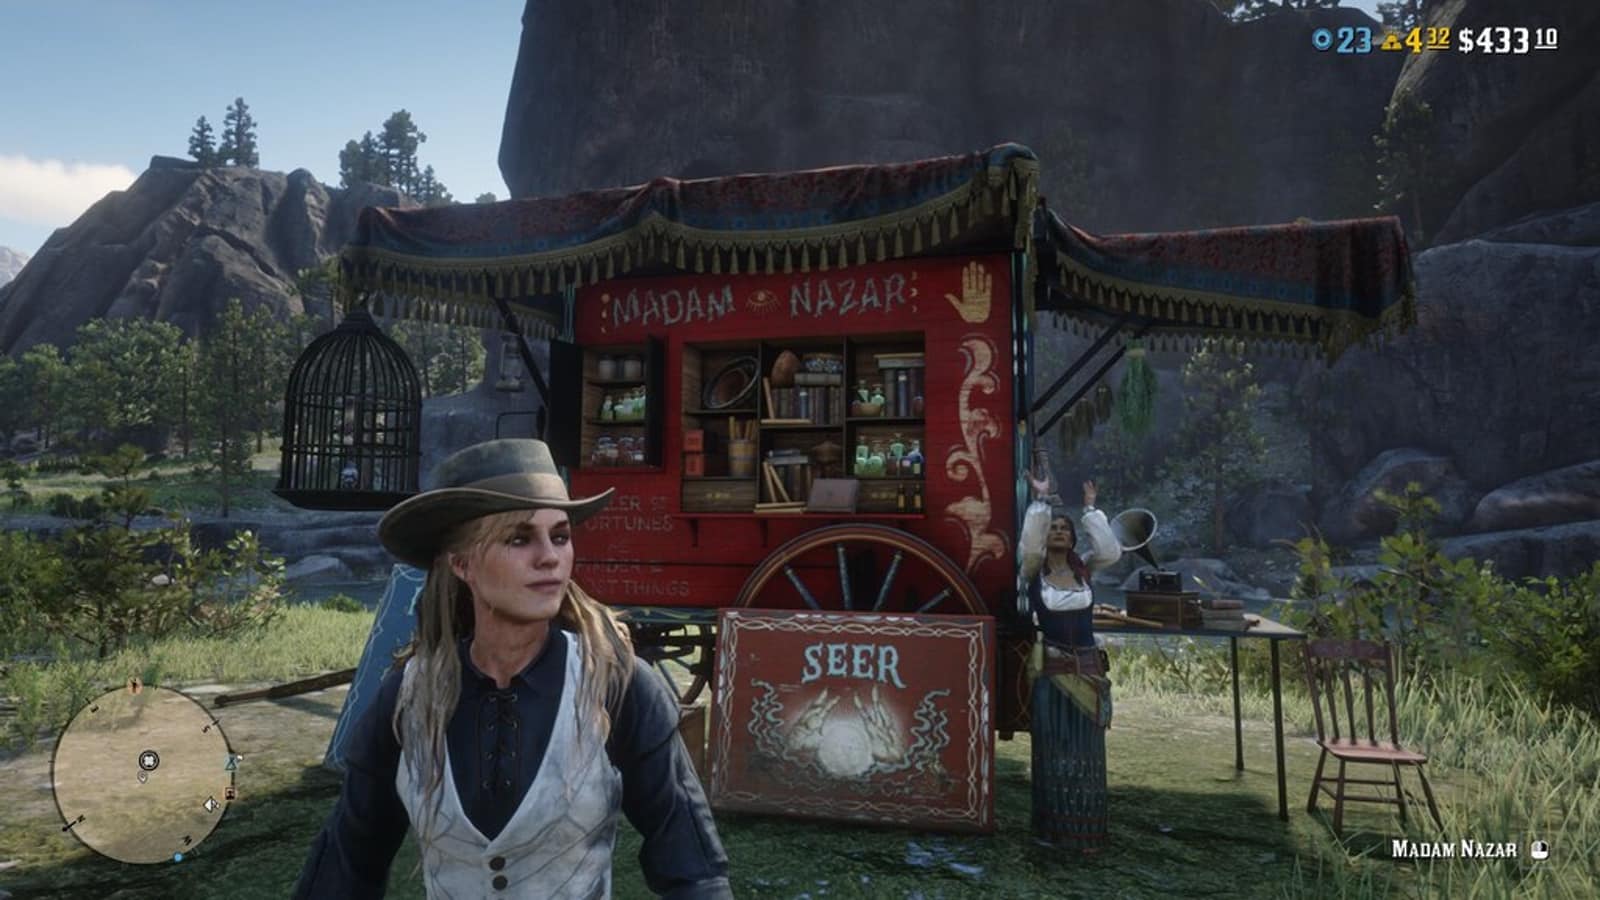 Madam Nazar's caravan